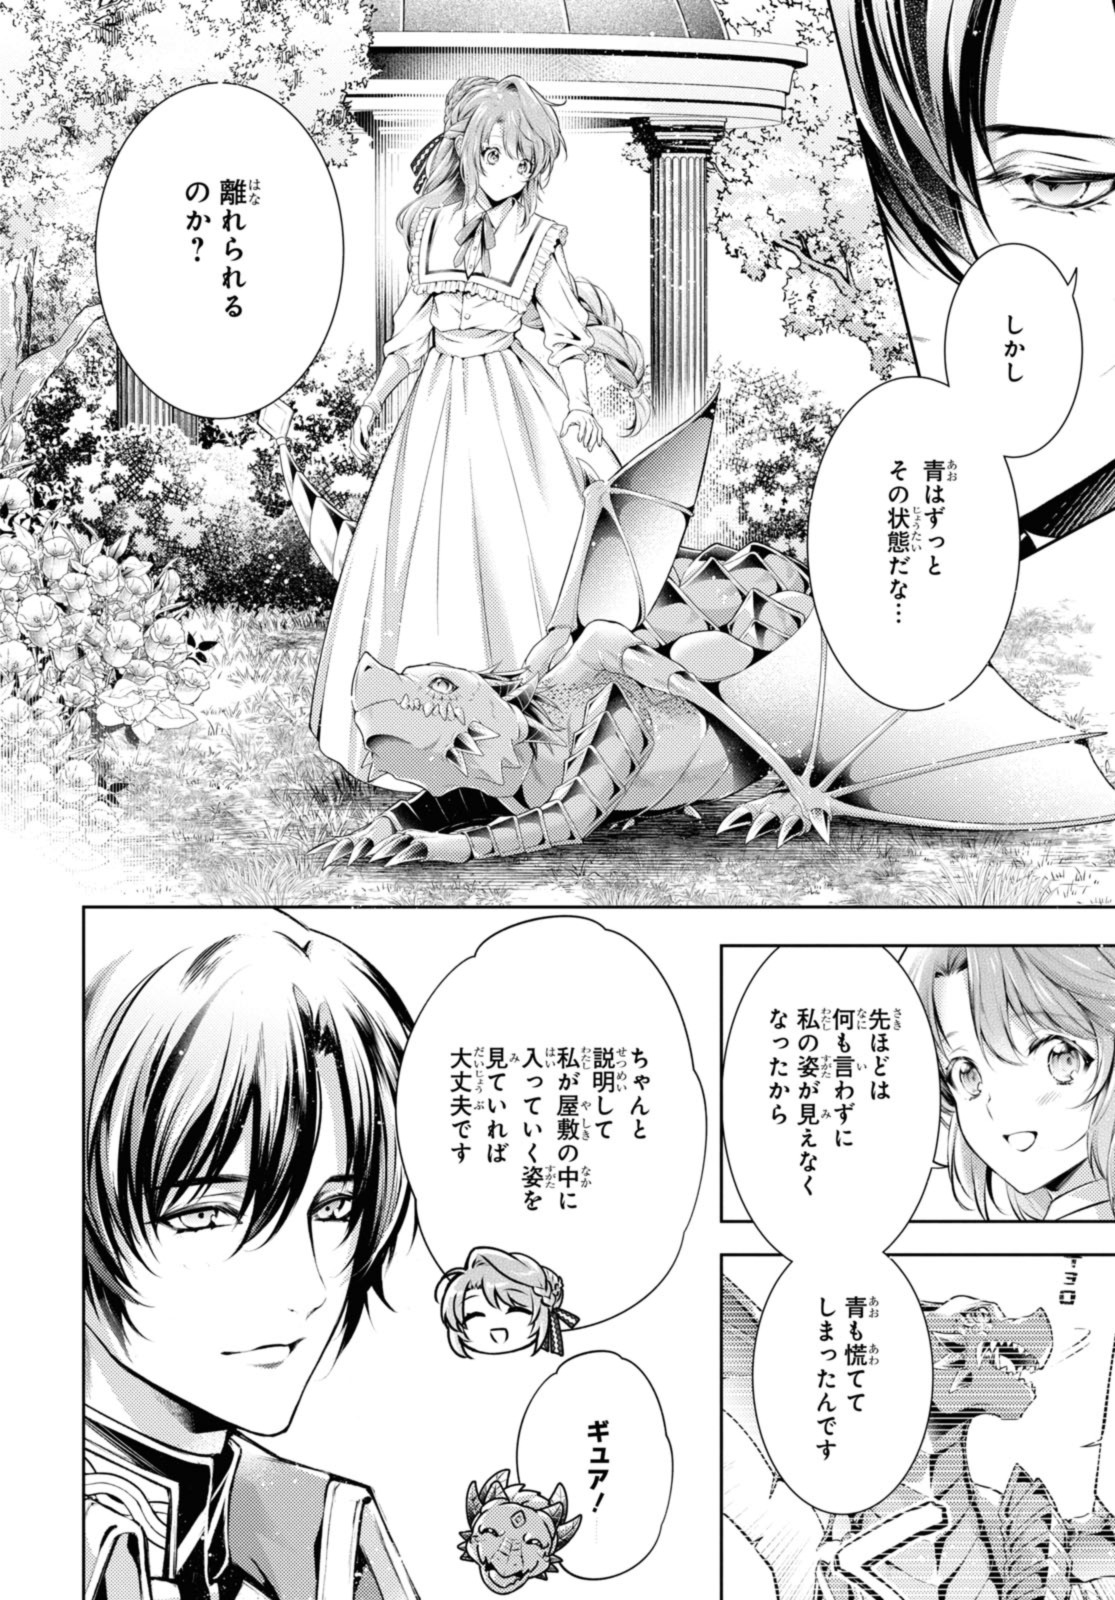 Ryukishi no Okiniiri - Chapter 43.2 - Page 2